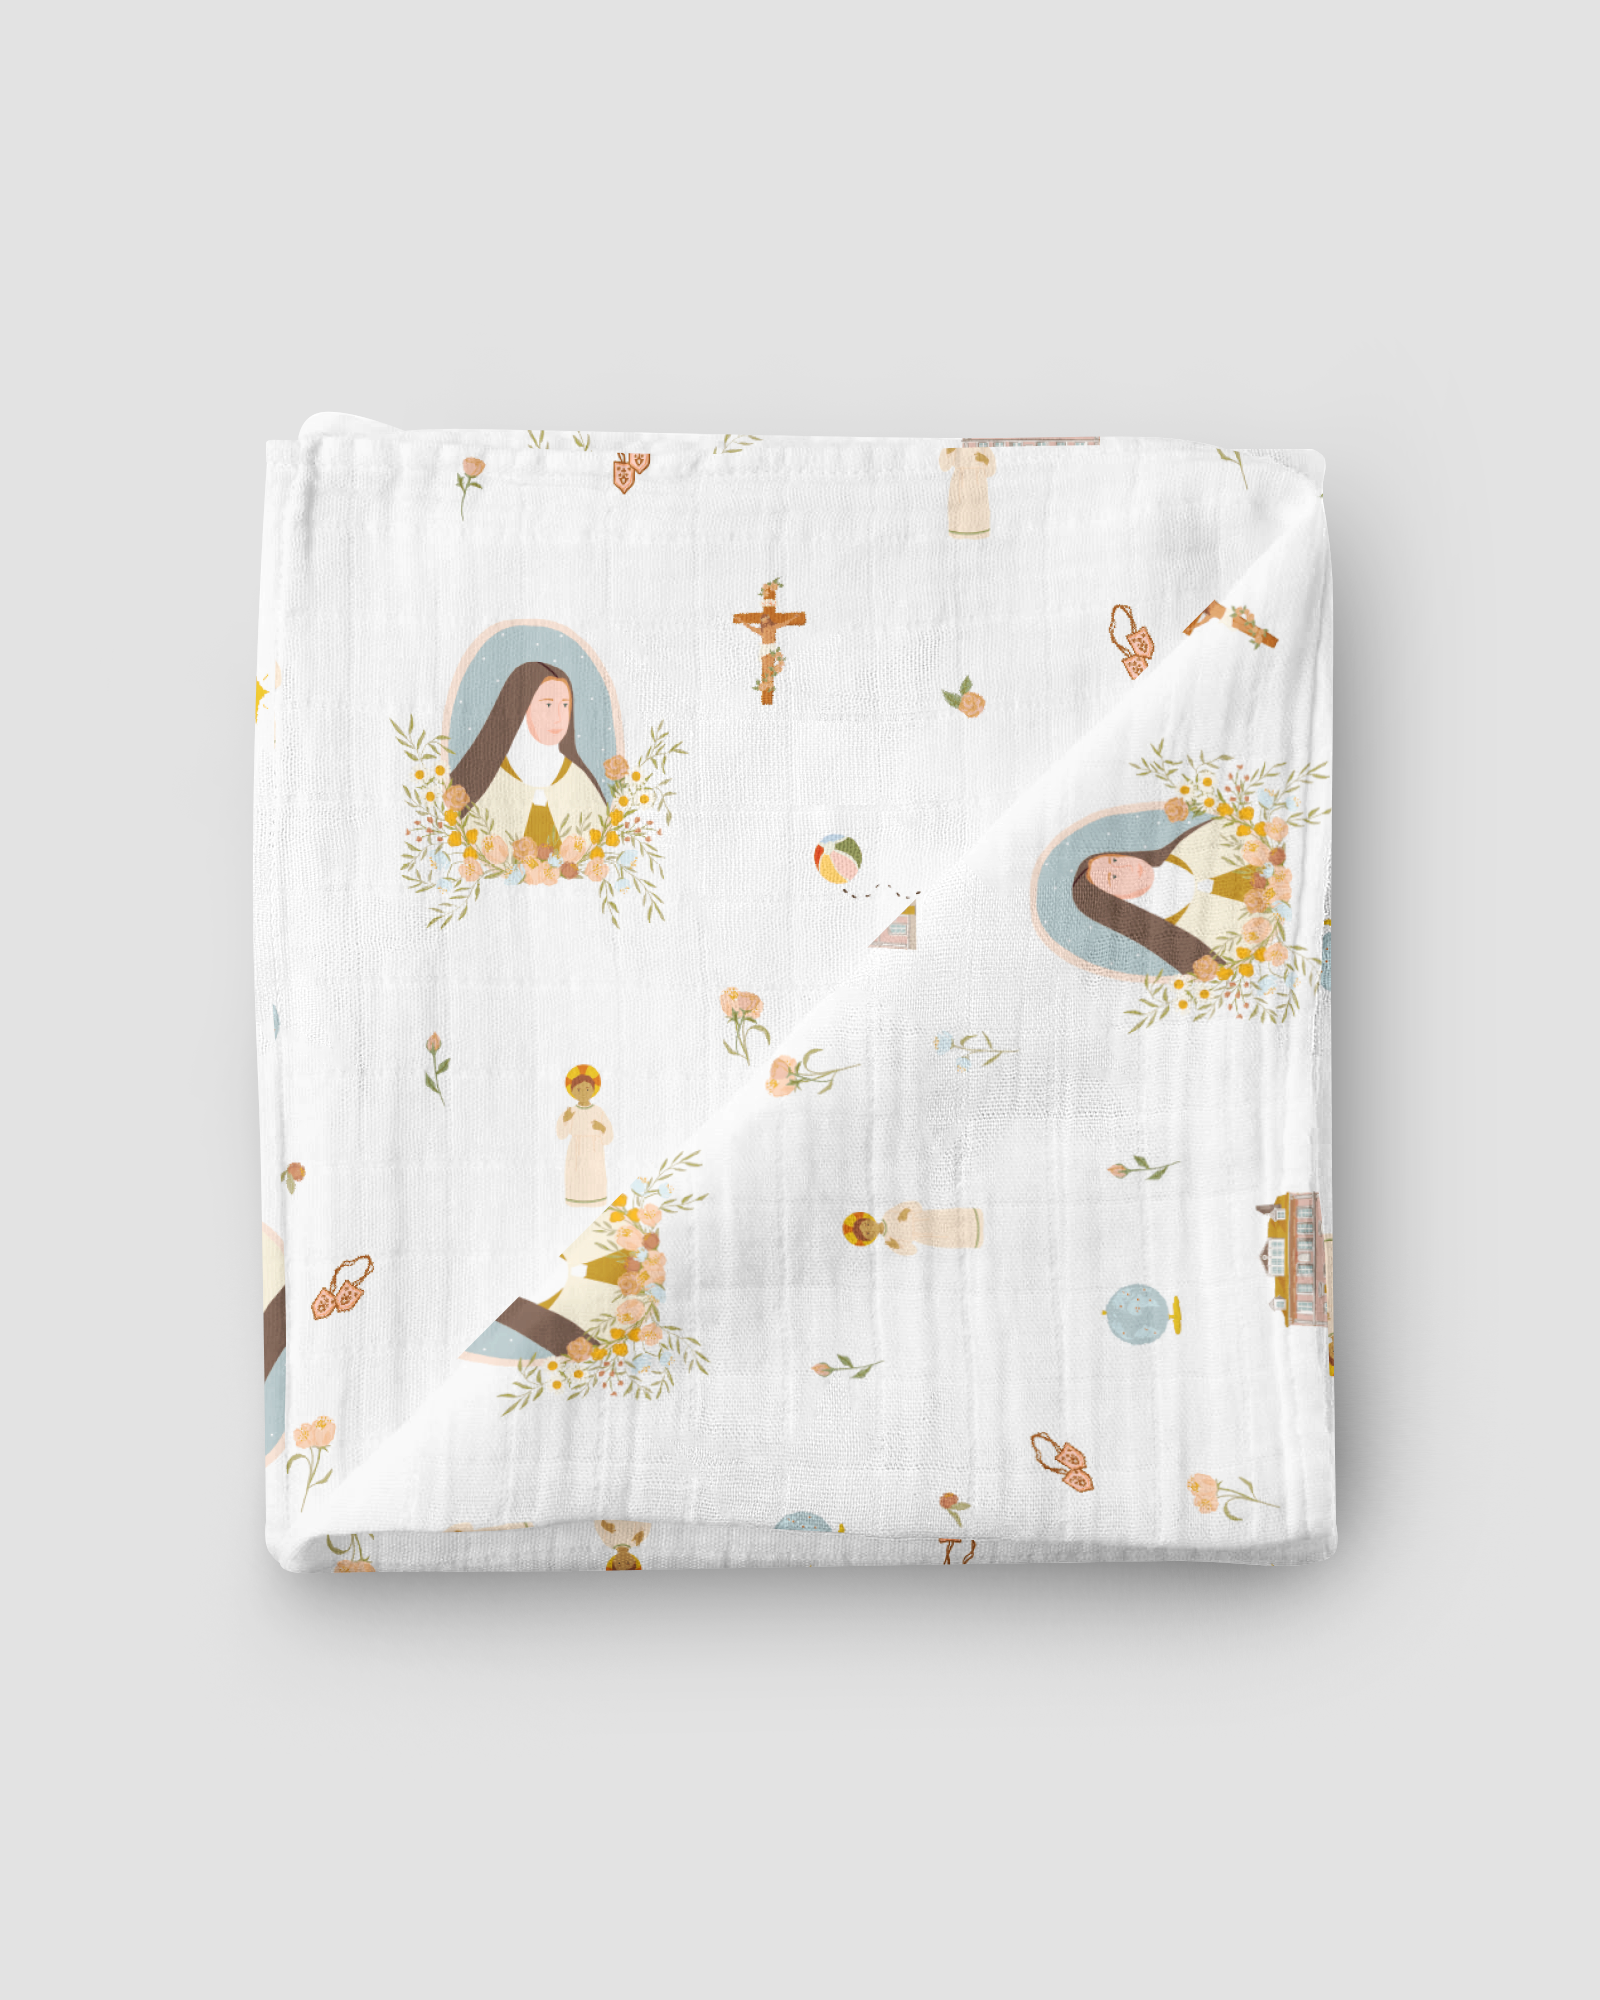 Goodnight Prayer Blanket - [Consumer]Catholic Gifts & More